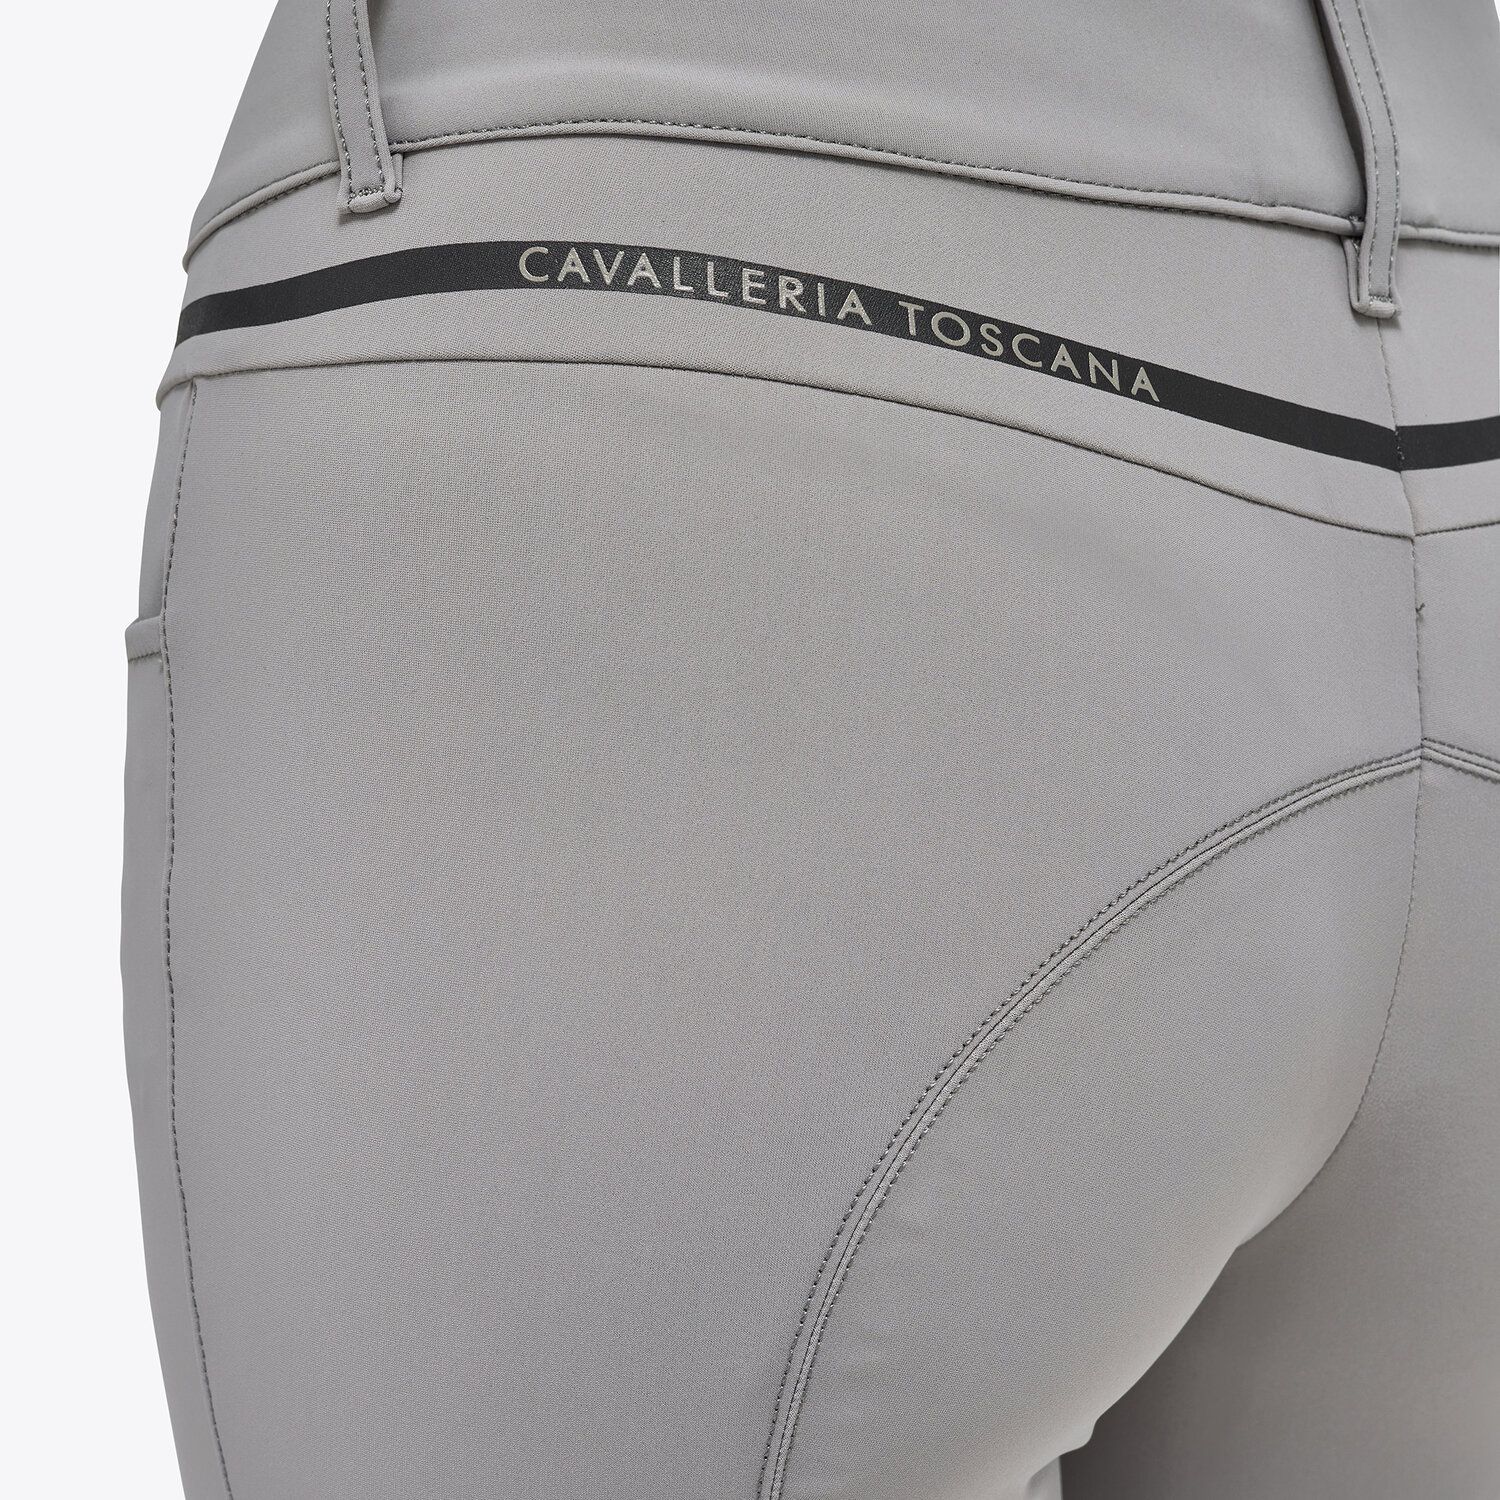 Cavalleria Toscana Women's trousers in technical fabric MEDIUM GREY-5